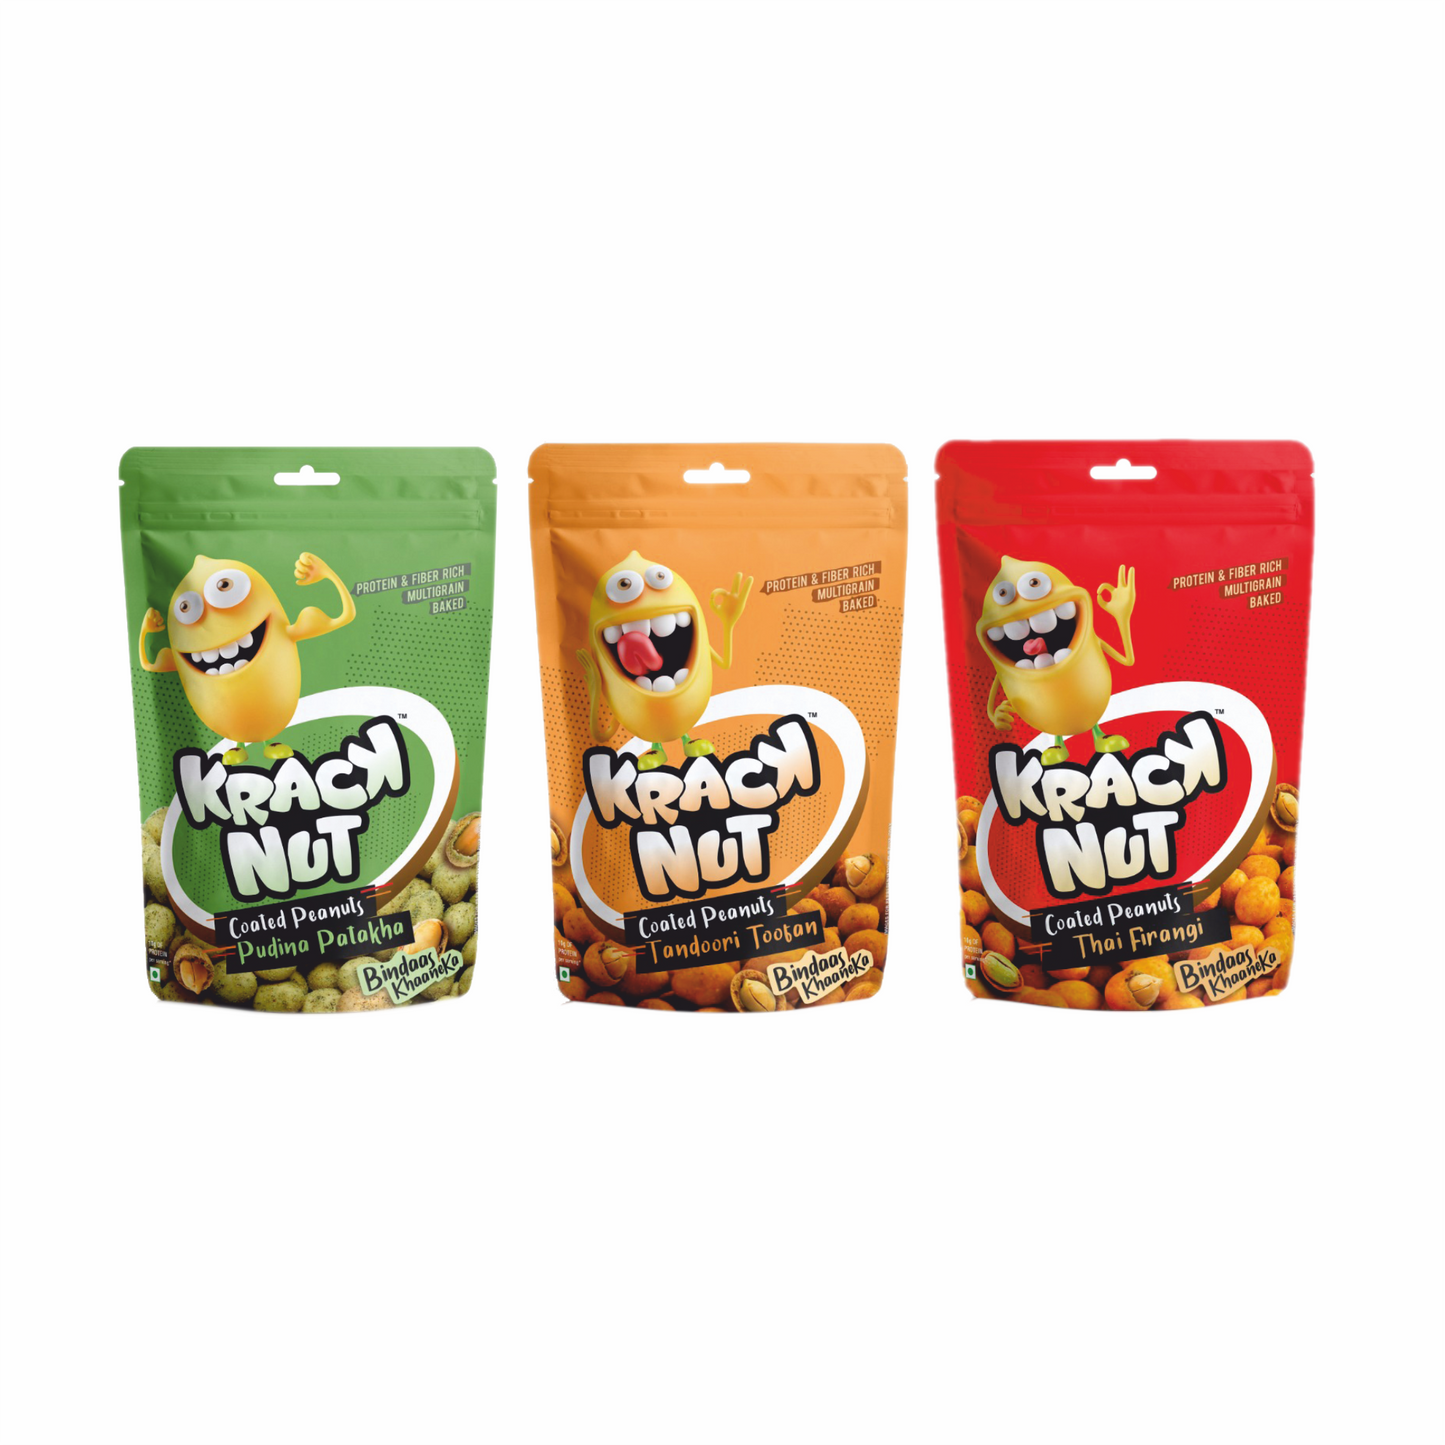 Kracknut Coated Peanuts - Assorted Pack of Three (85g x 3N)